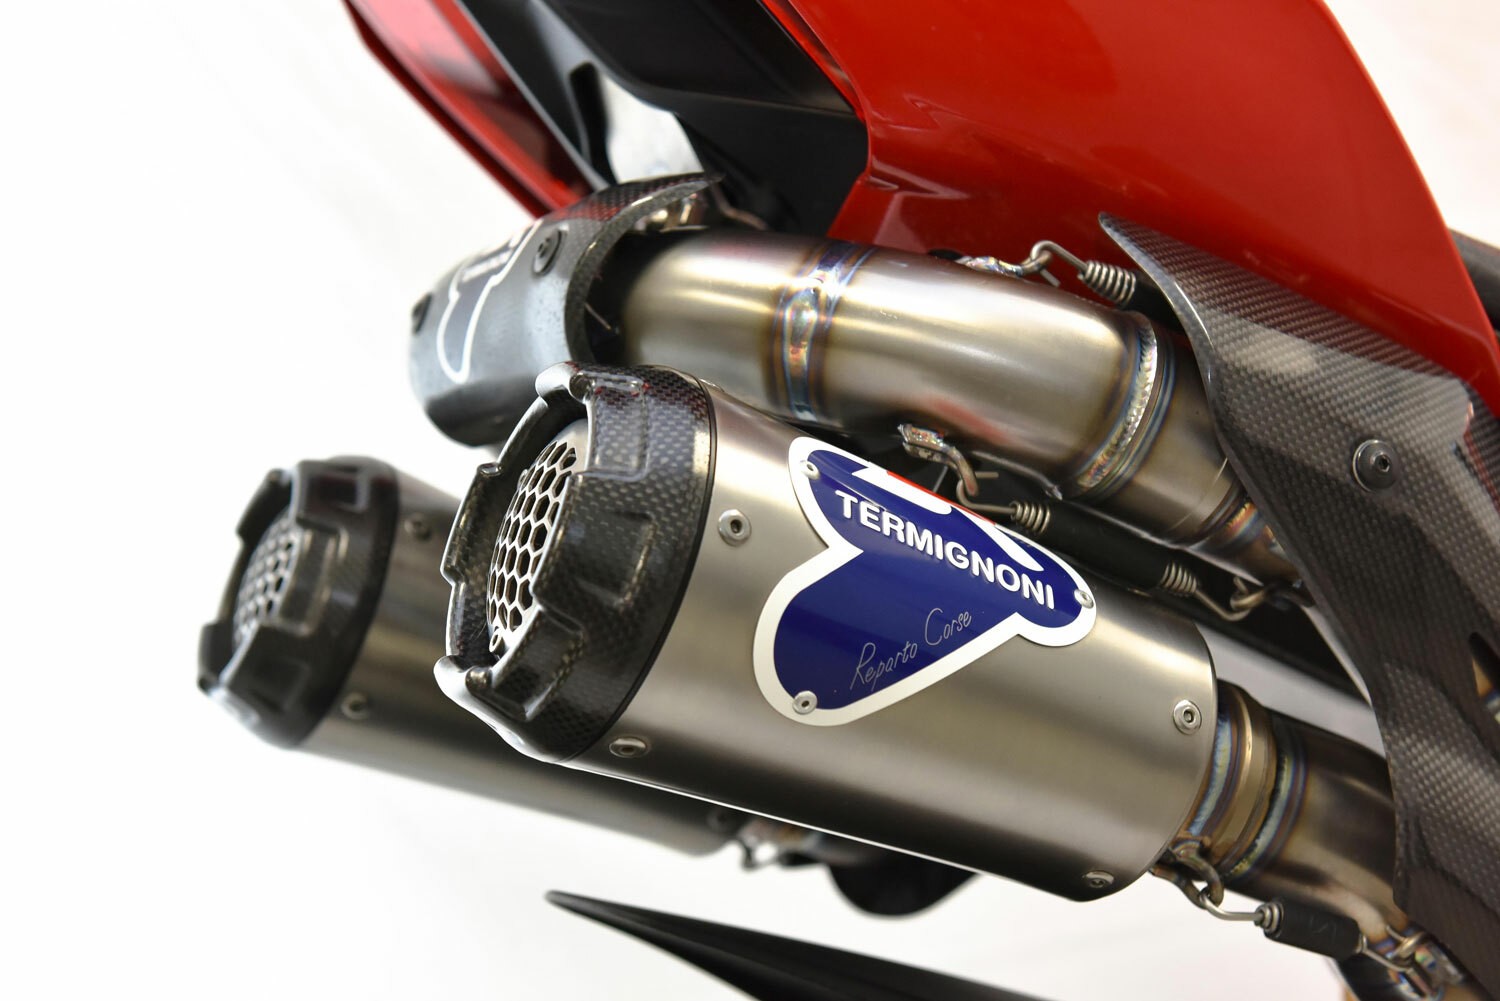 Termignoni Reparto Corse Superbike Stainless Full Exhaust System - Ducati Panigale V4 / V4R / V4S / Superleggera